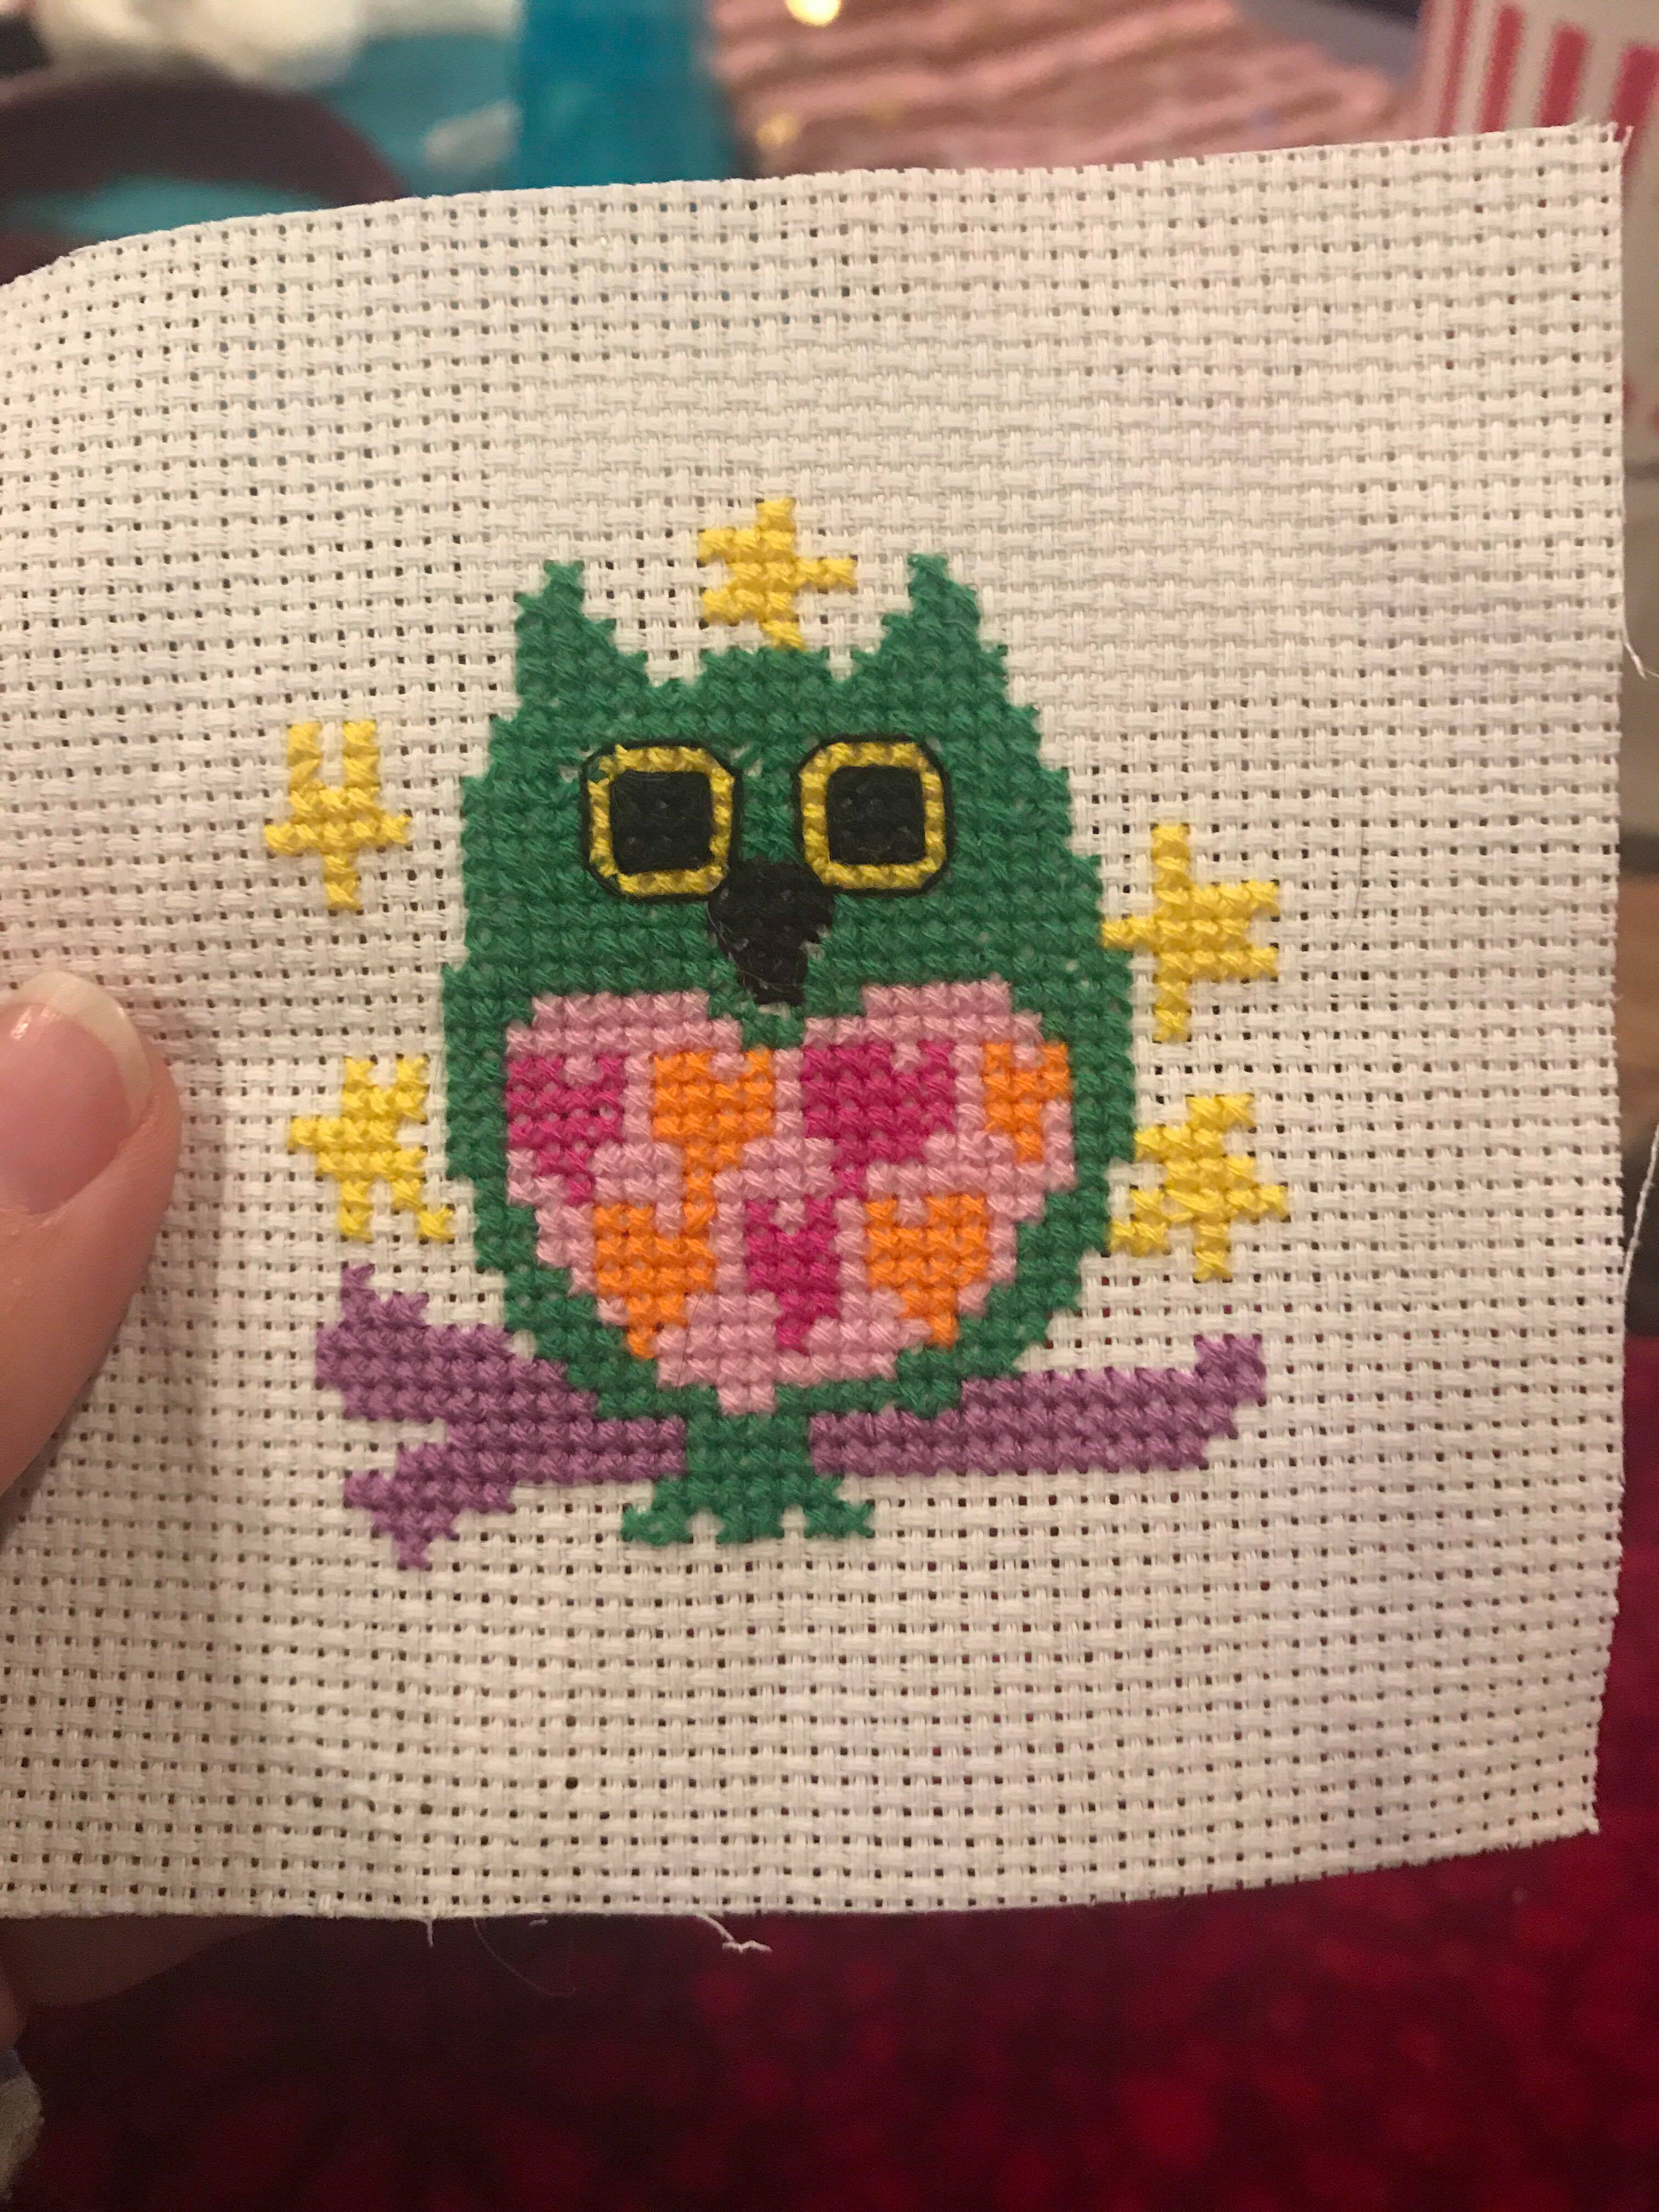 A tiny cross stitch of an owl